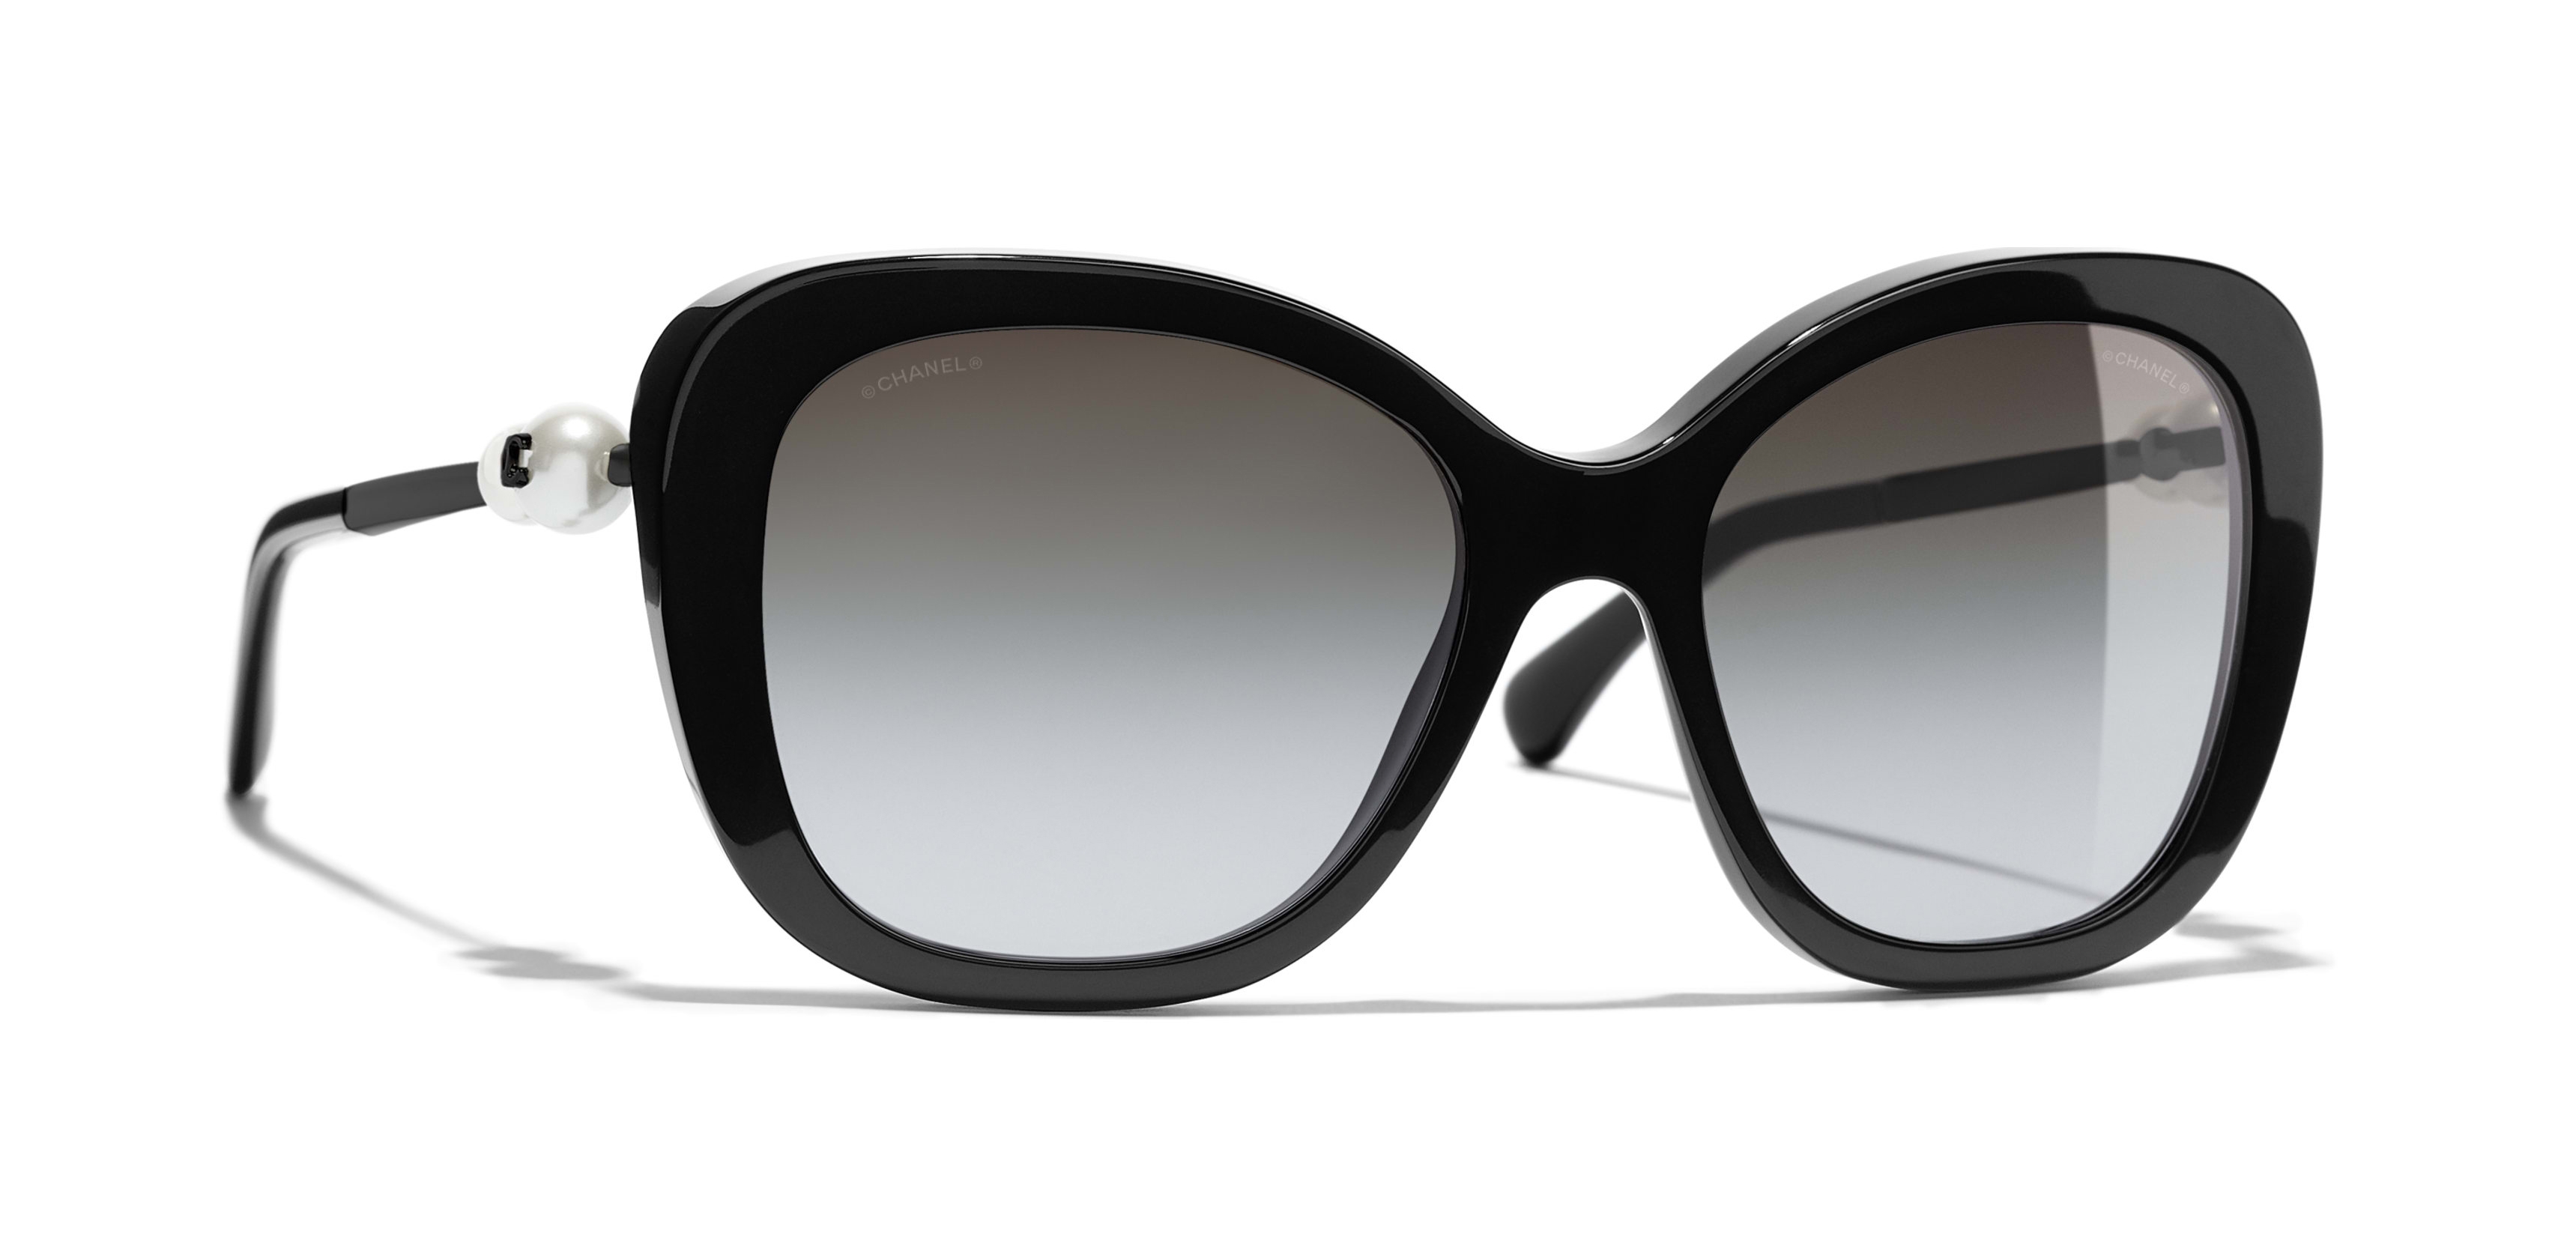 CHANEL CC Logo Sunglasses 5143 Black and White